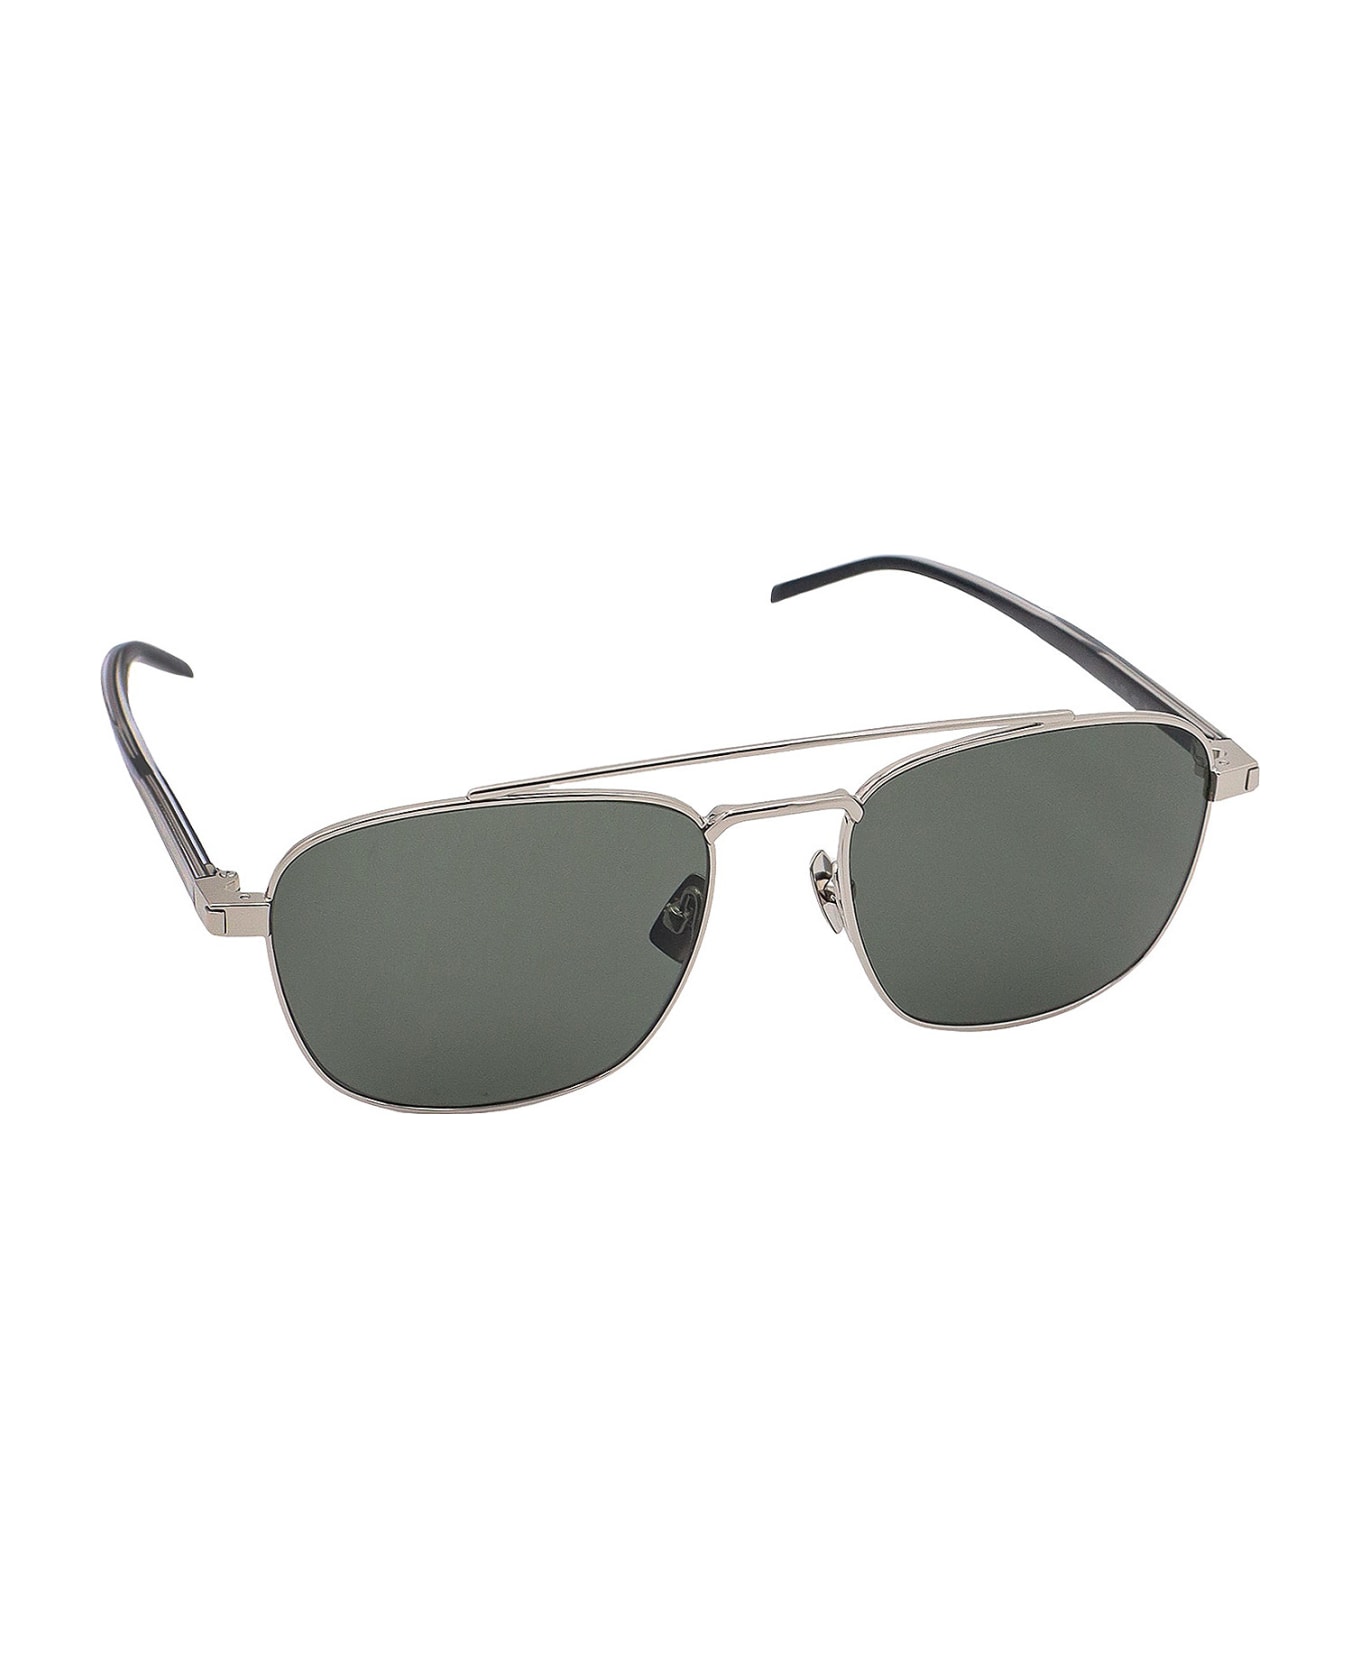 Saint Laurent Aviator Sunglasses - Grey